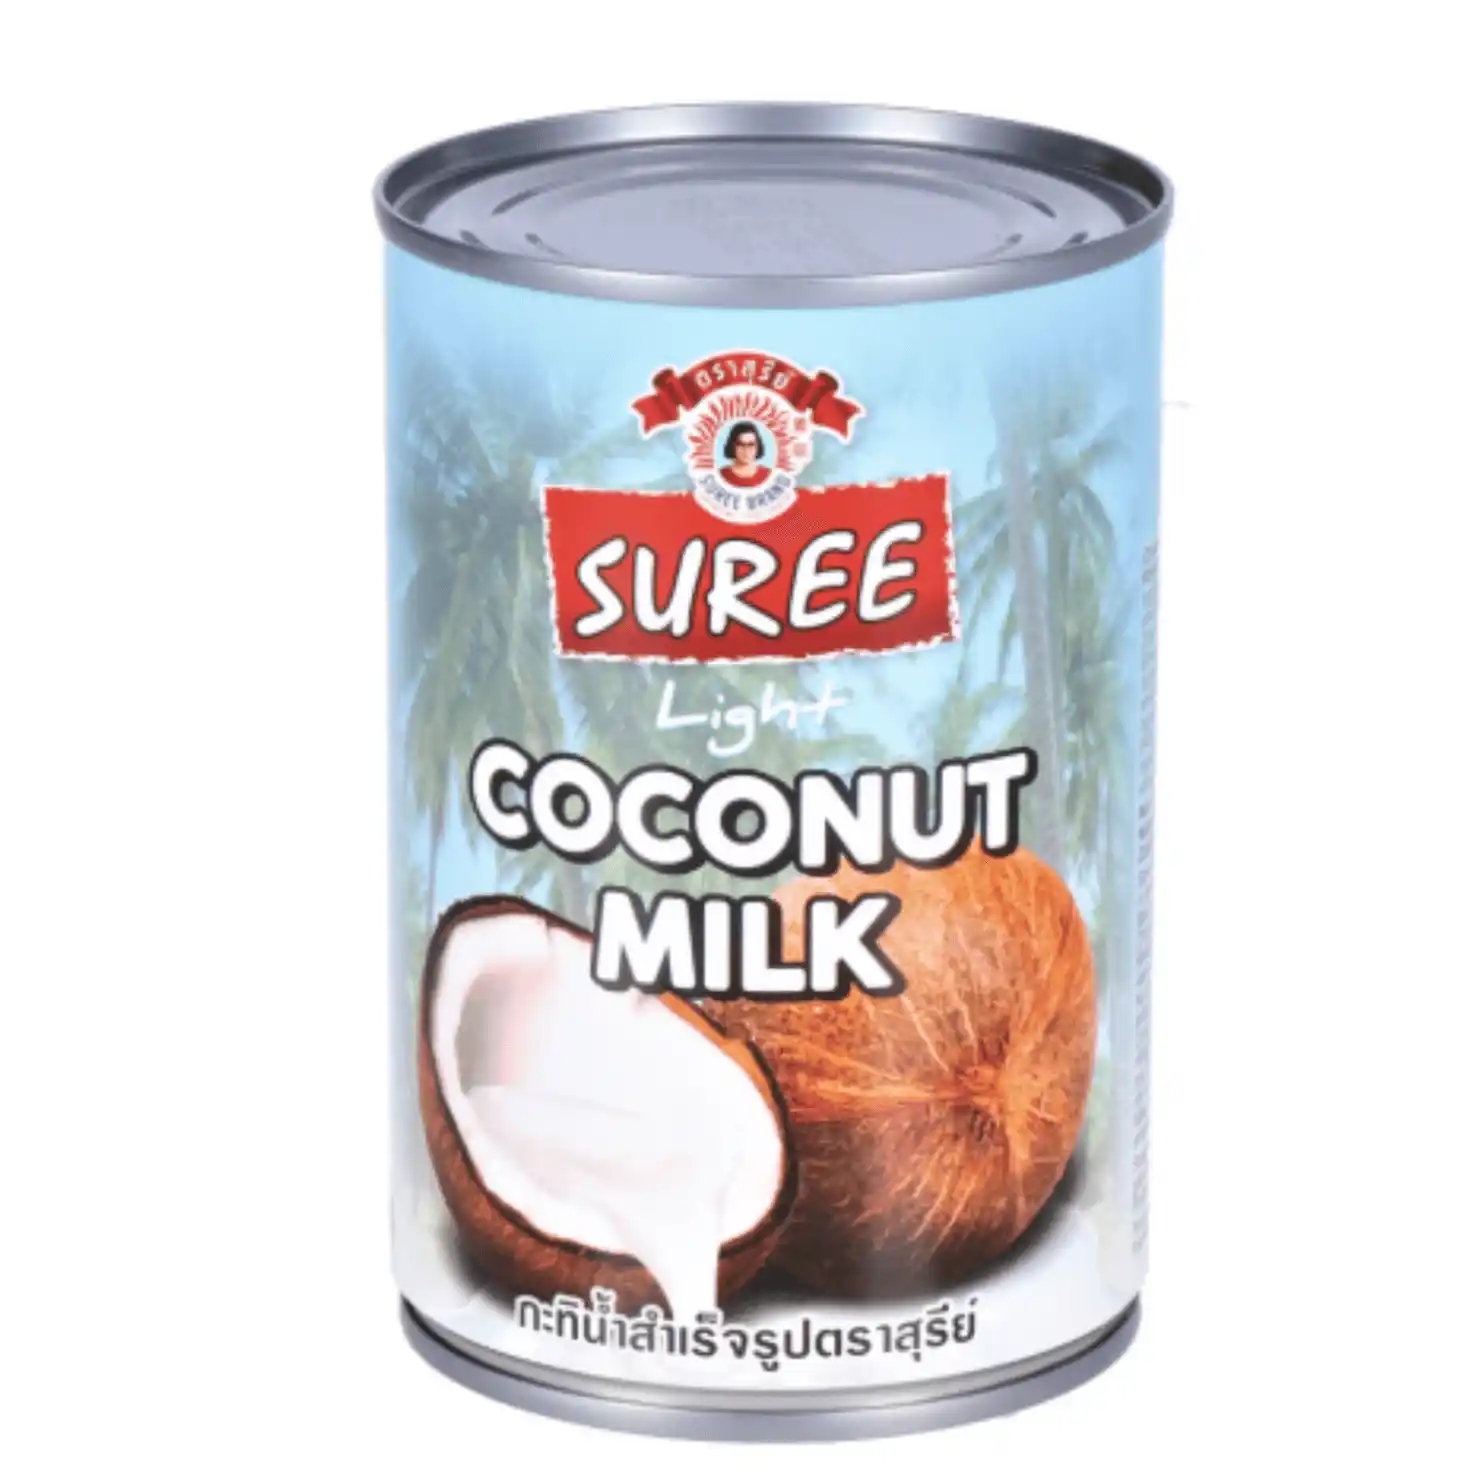 Suree Light Coconut Milk * 165ML